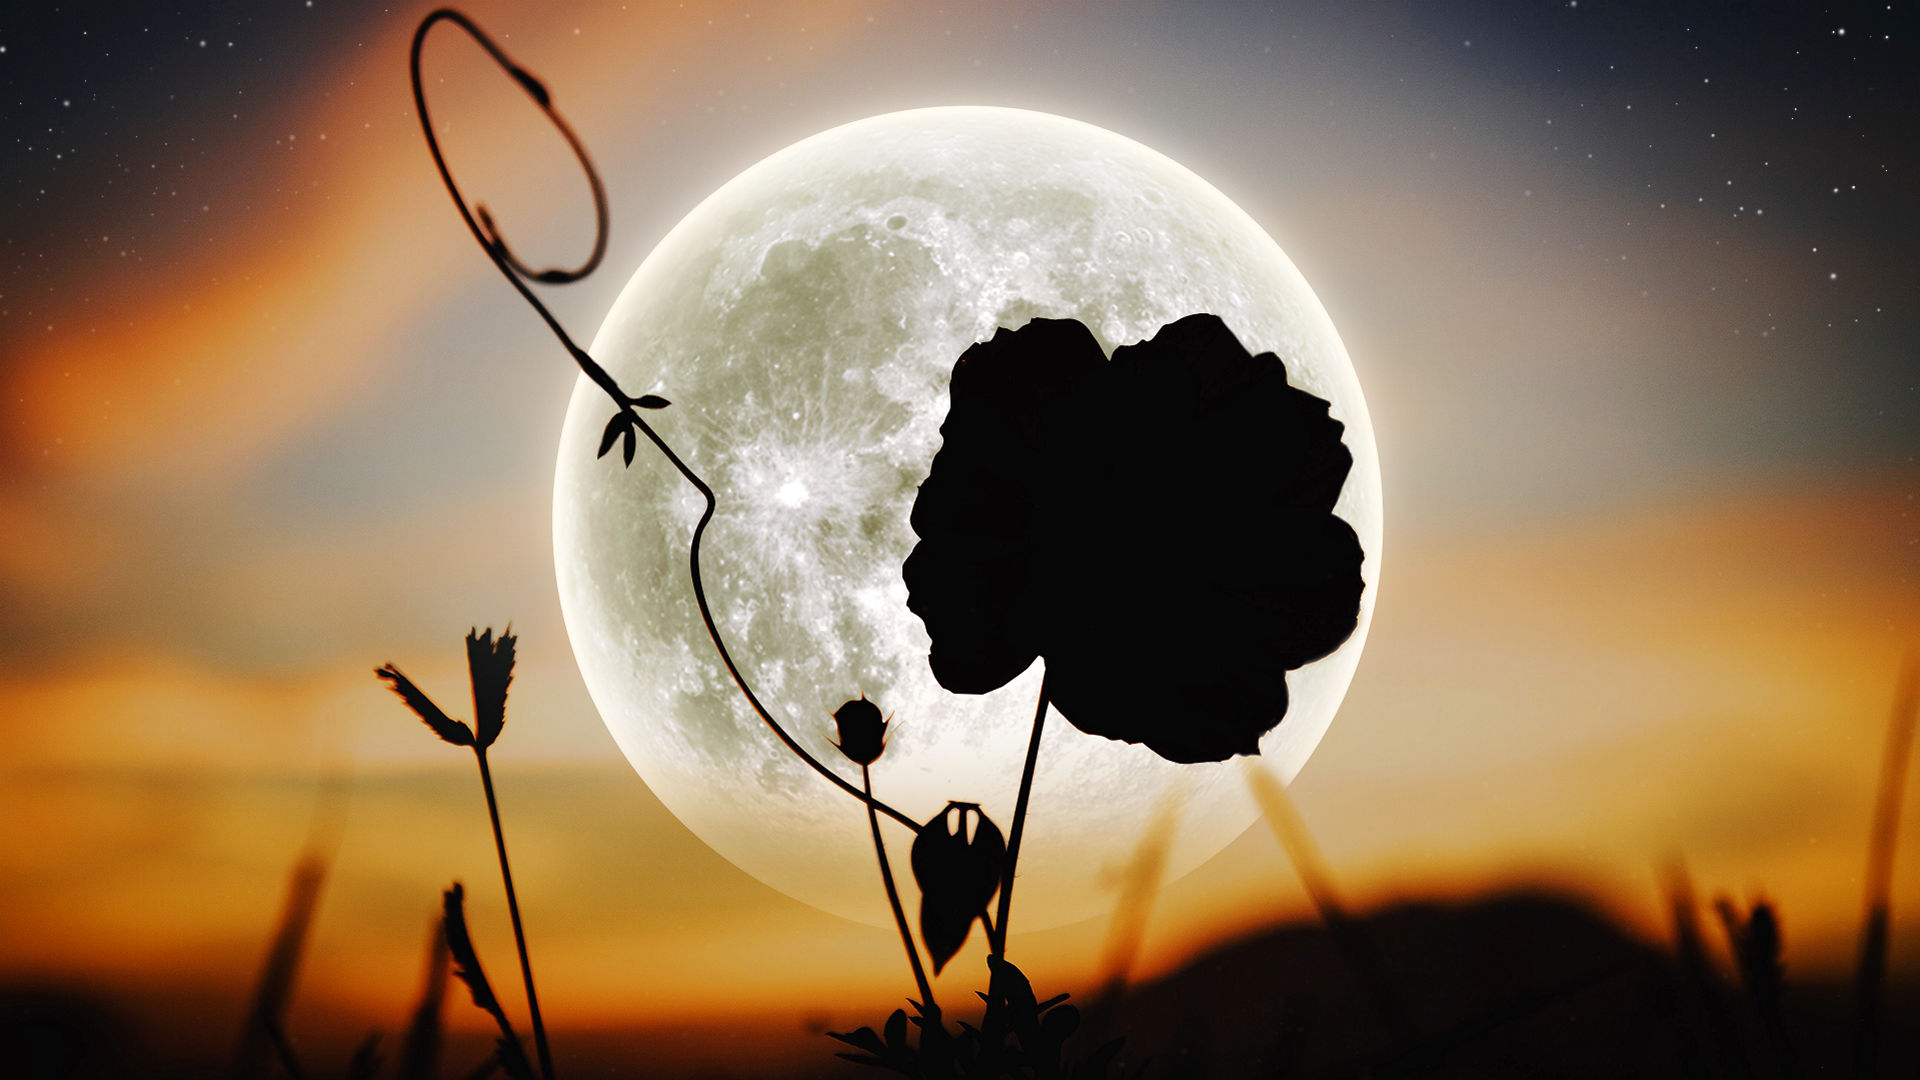 Full Flower Moon: The Last Supermoon Of 2020